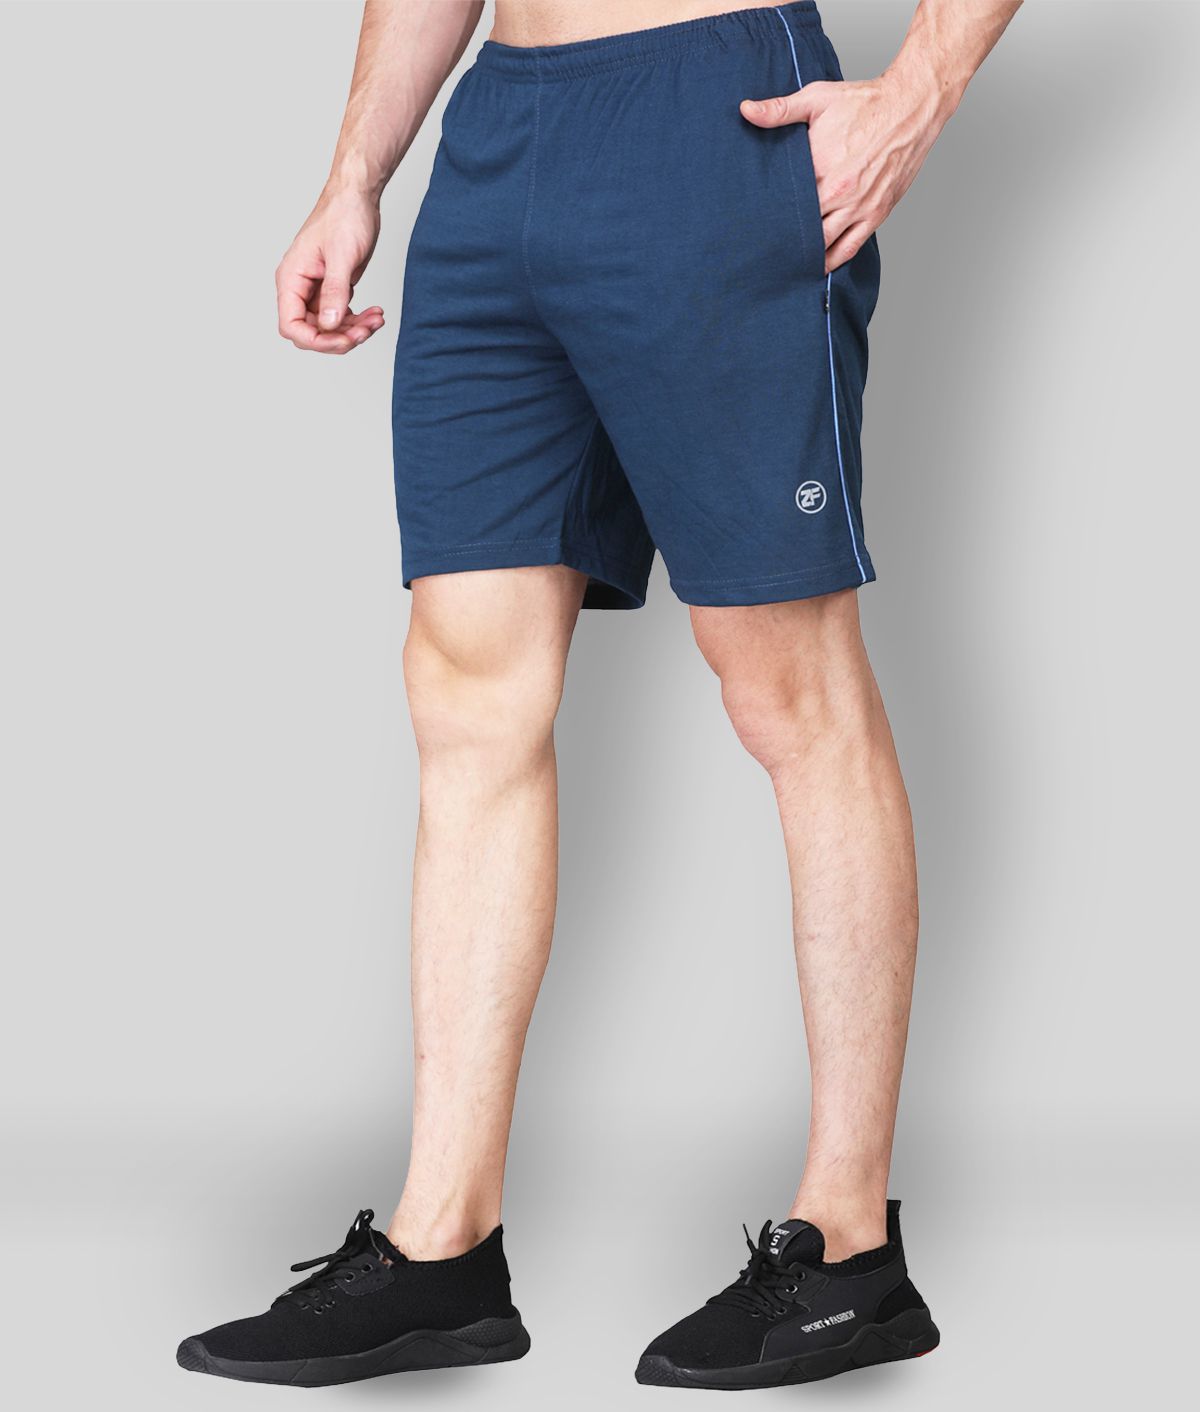 Zimfit Blue Cotton Blend Walking Shorts Single